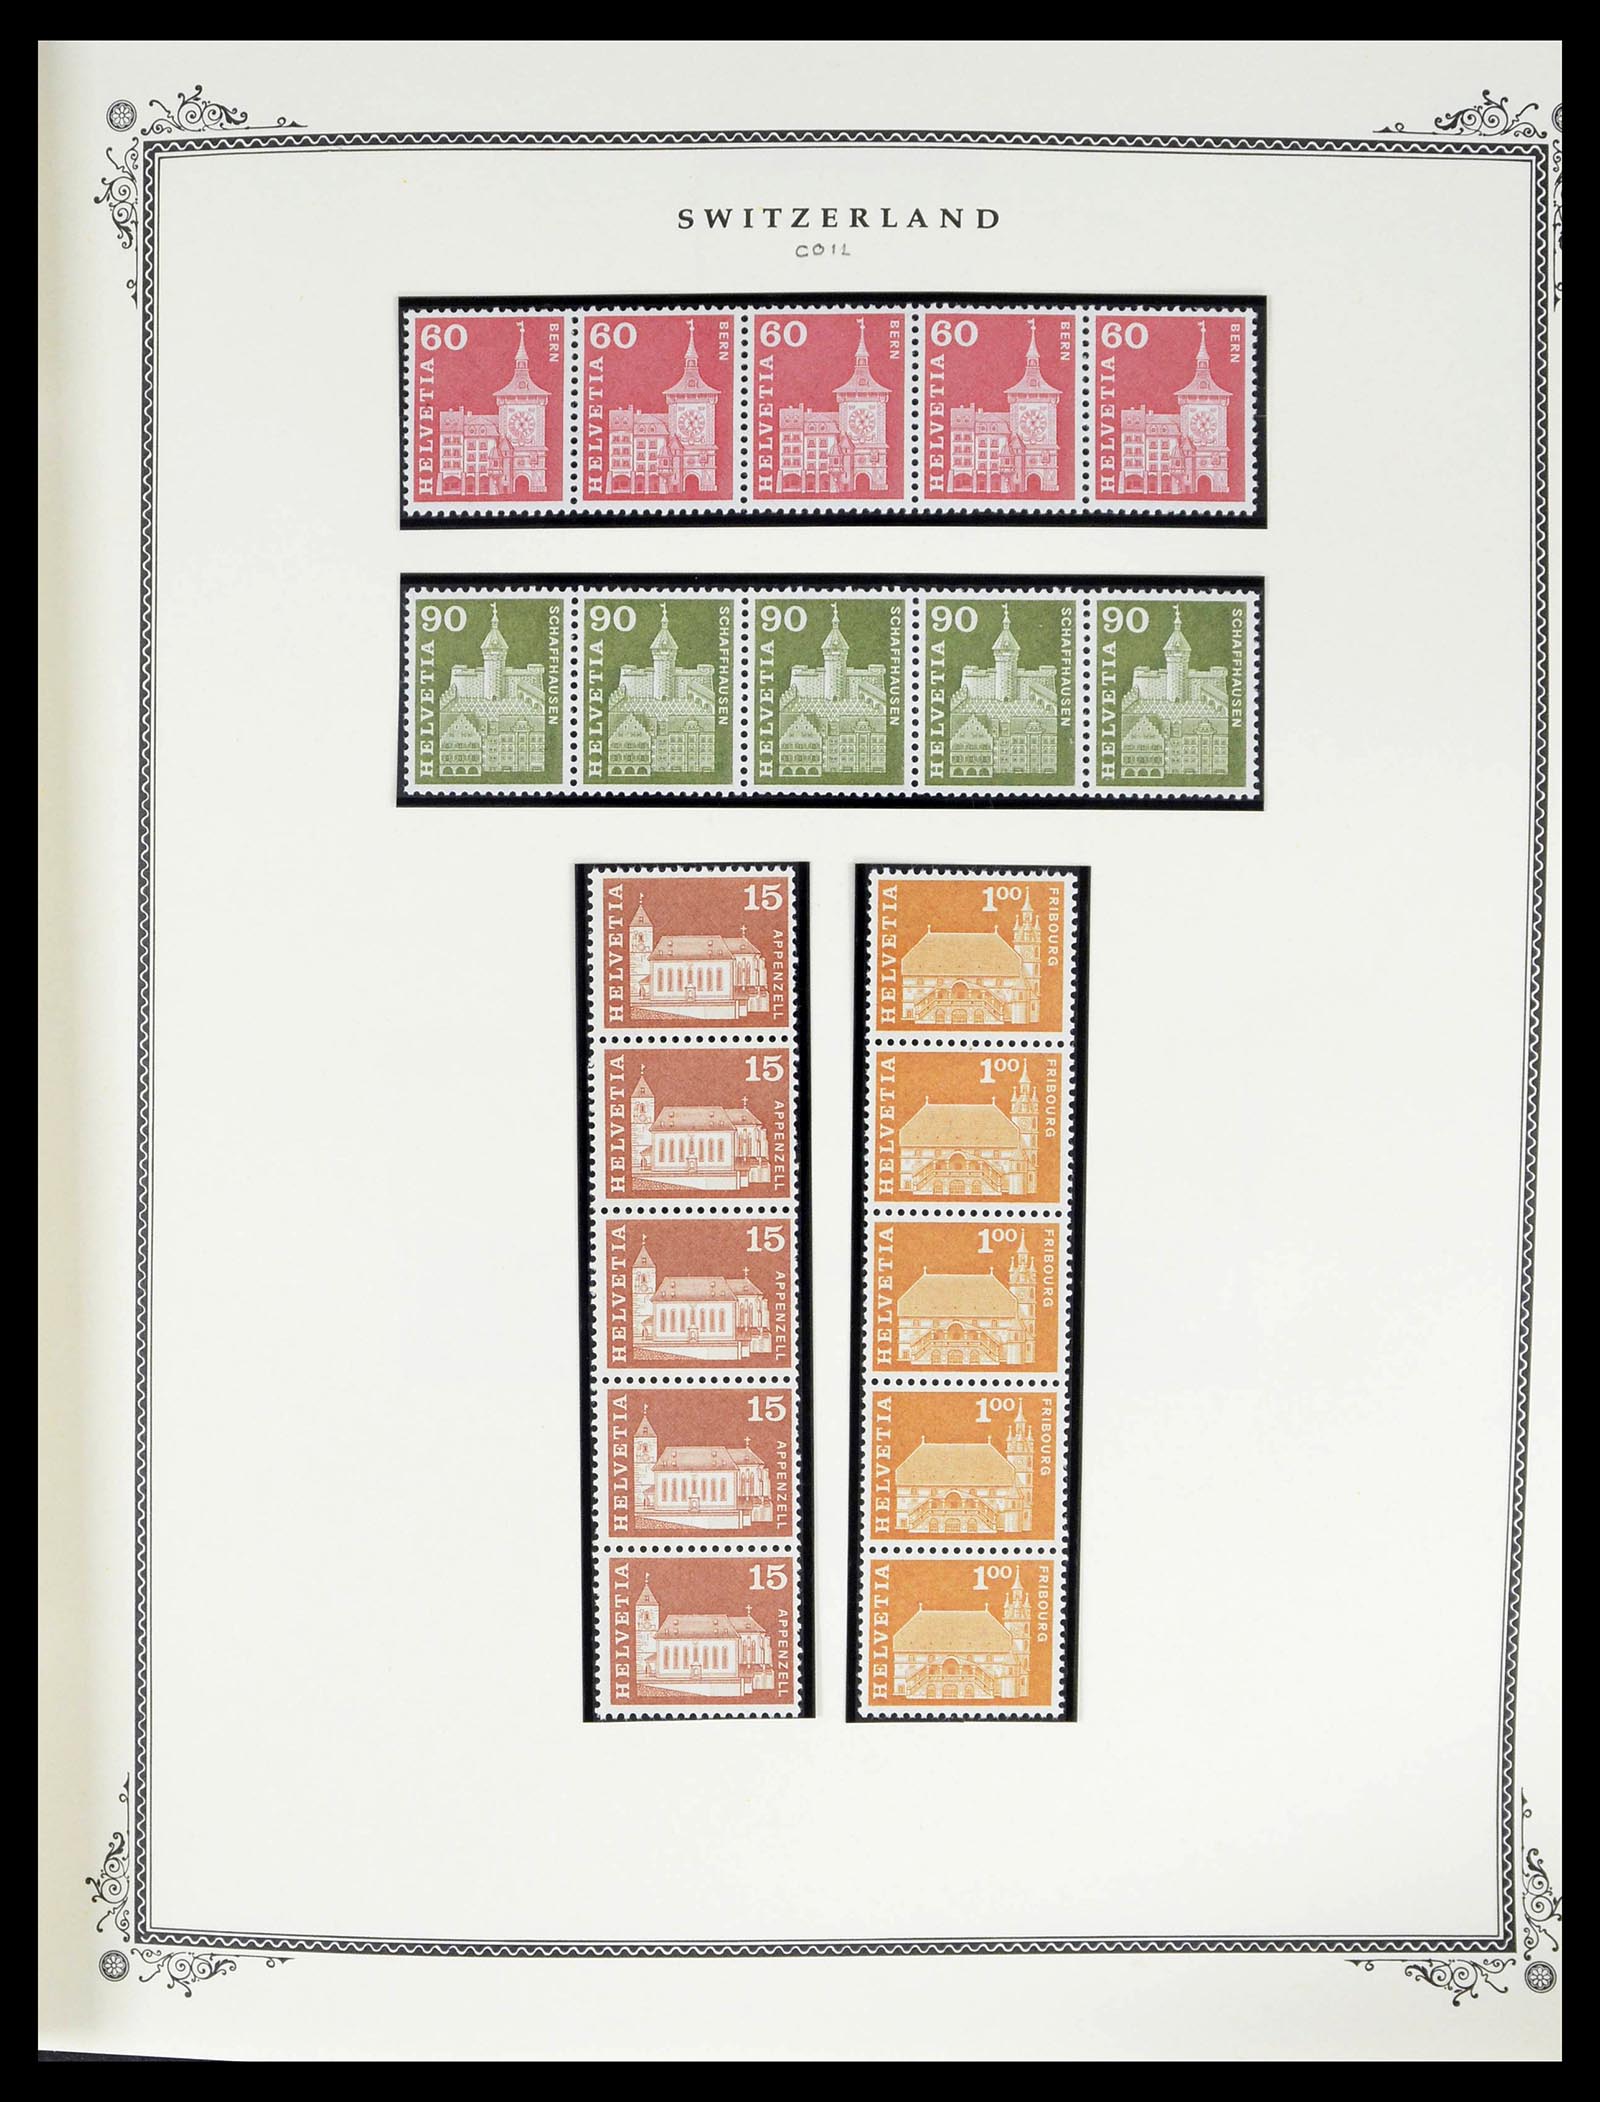 39178 0050 - Stamp collection 39178 Switzerland 1850-1989.